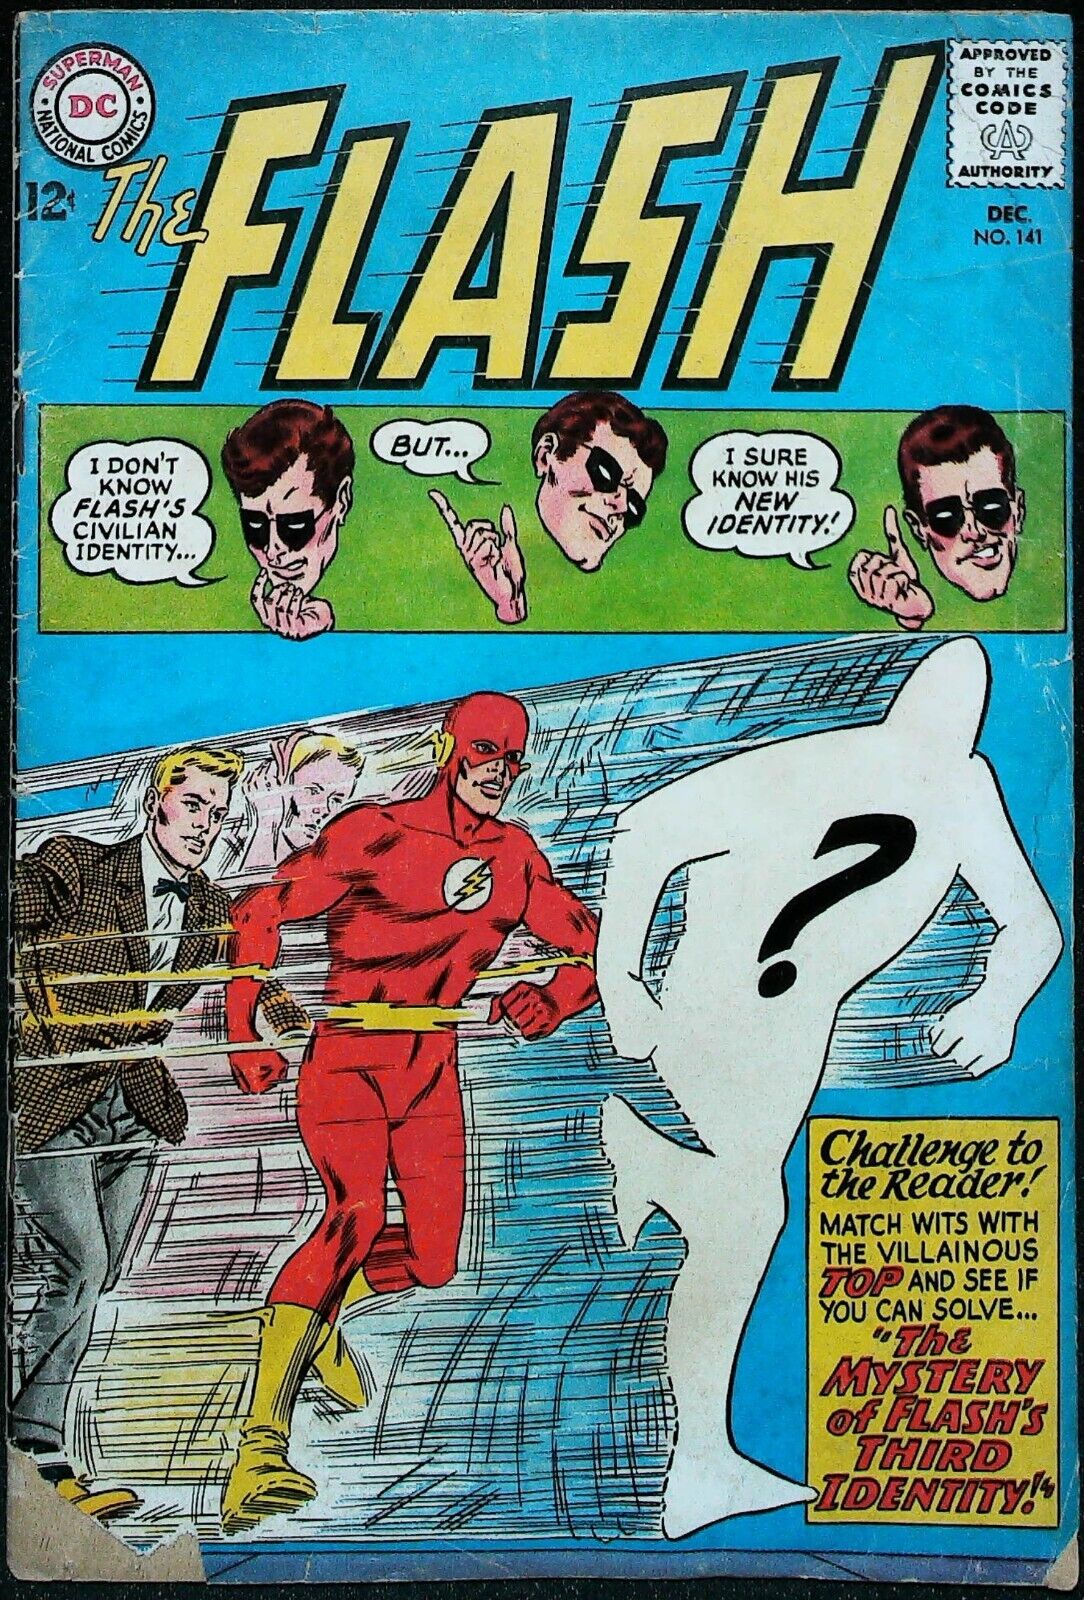 The Flash #141 Vol 1 (1963) KEY *1st Appearance of Paul Gambi* - Good Range